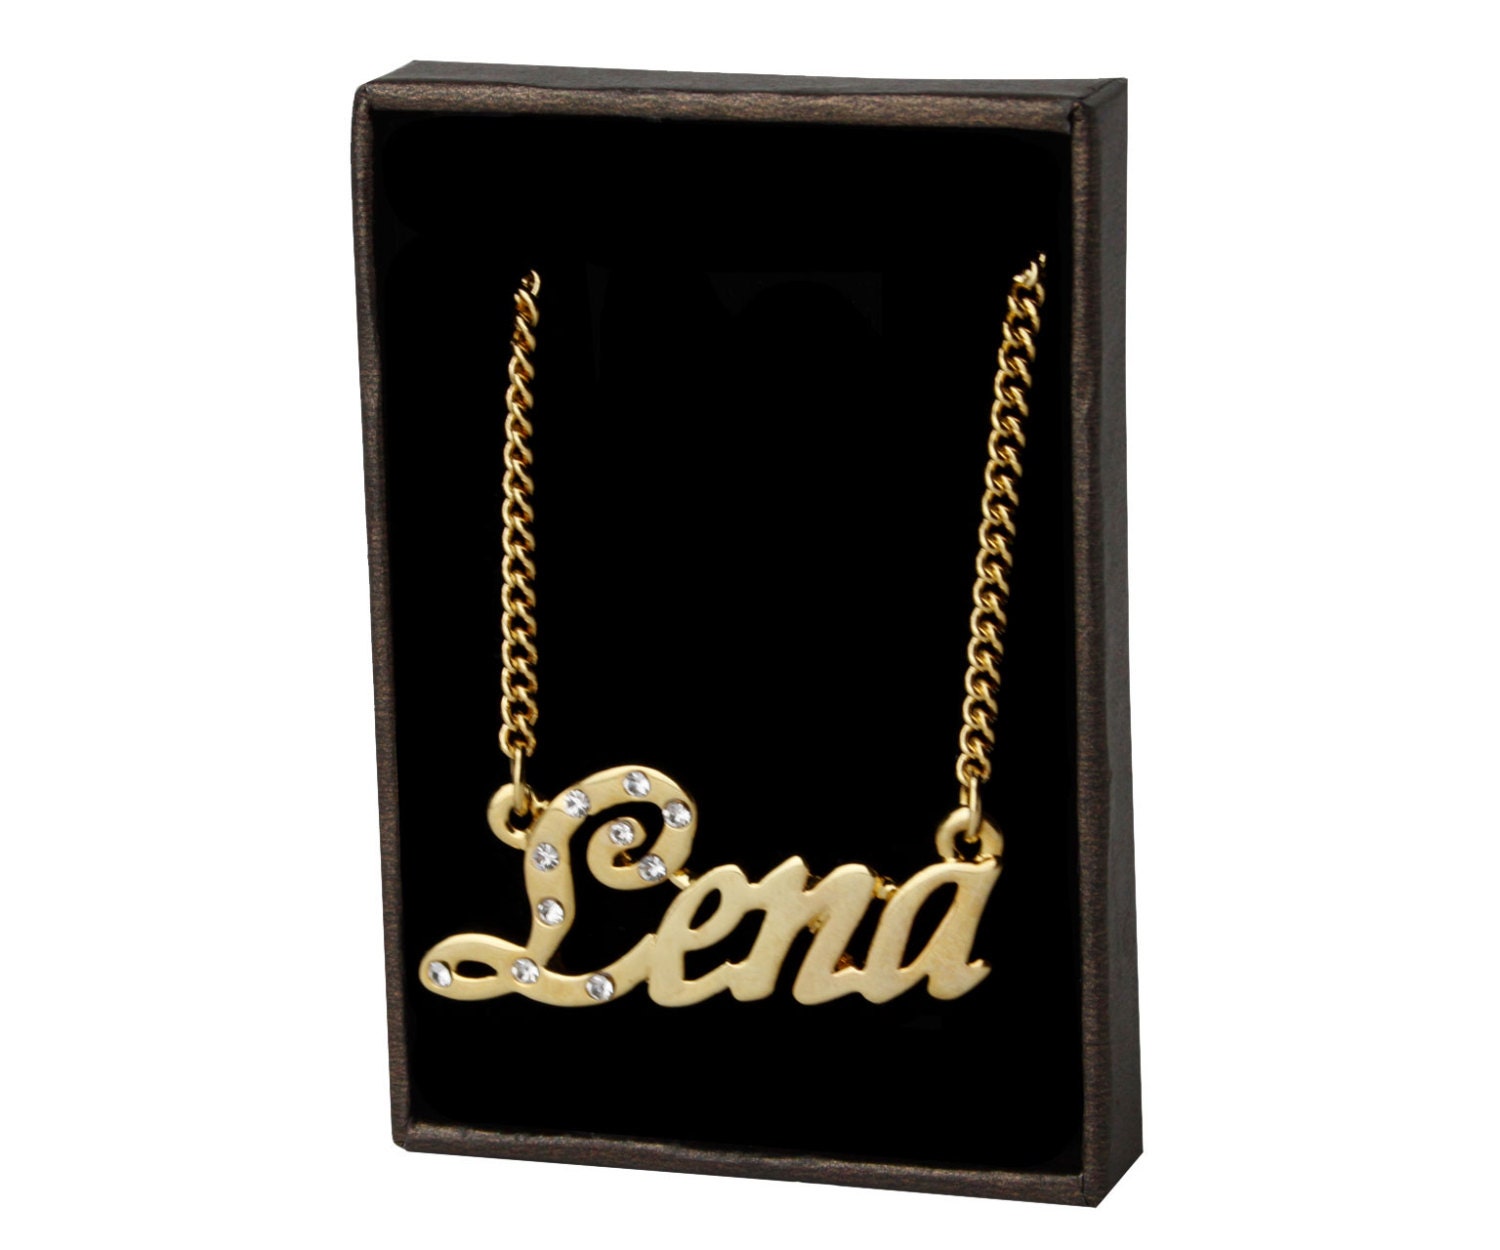 Lena v02-18k Gold Finished Luxury Necklace Personalized Name Gifts